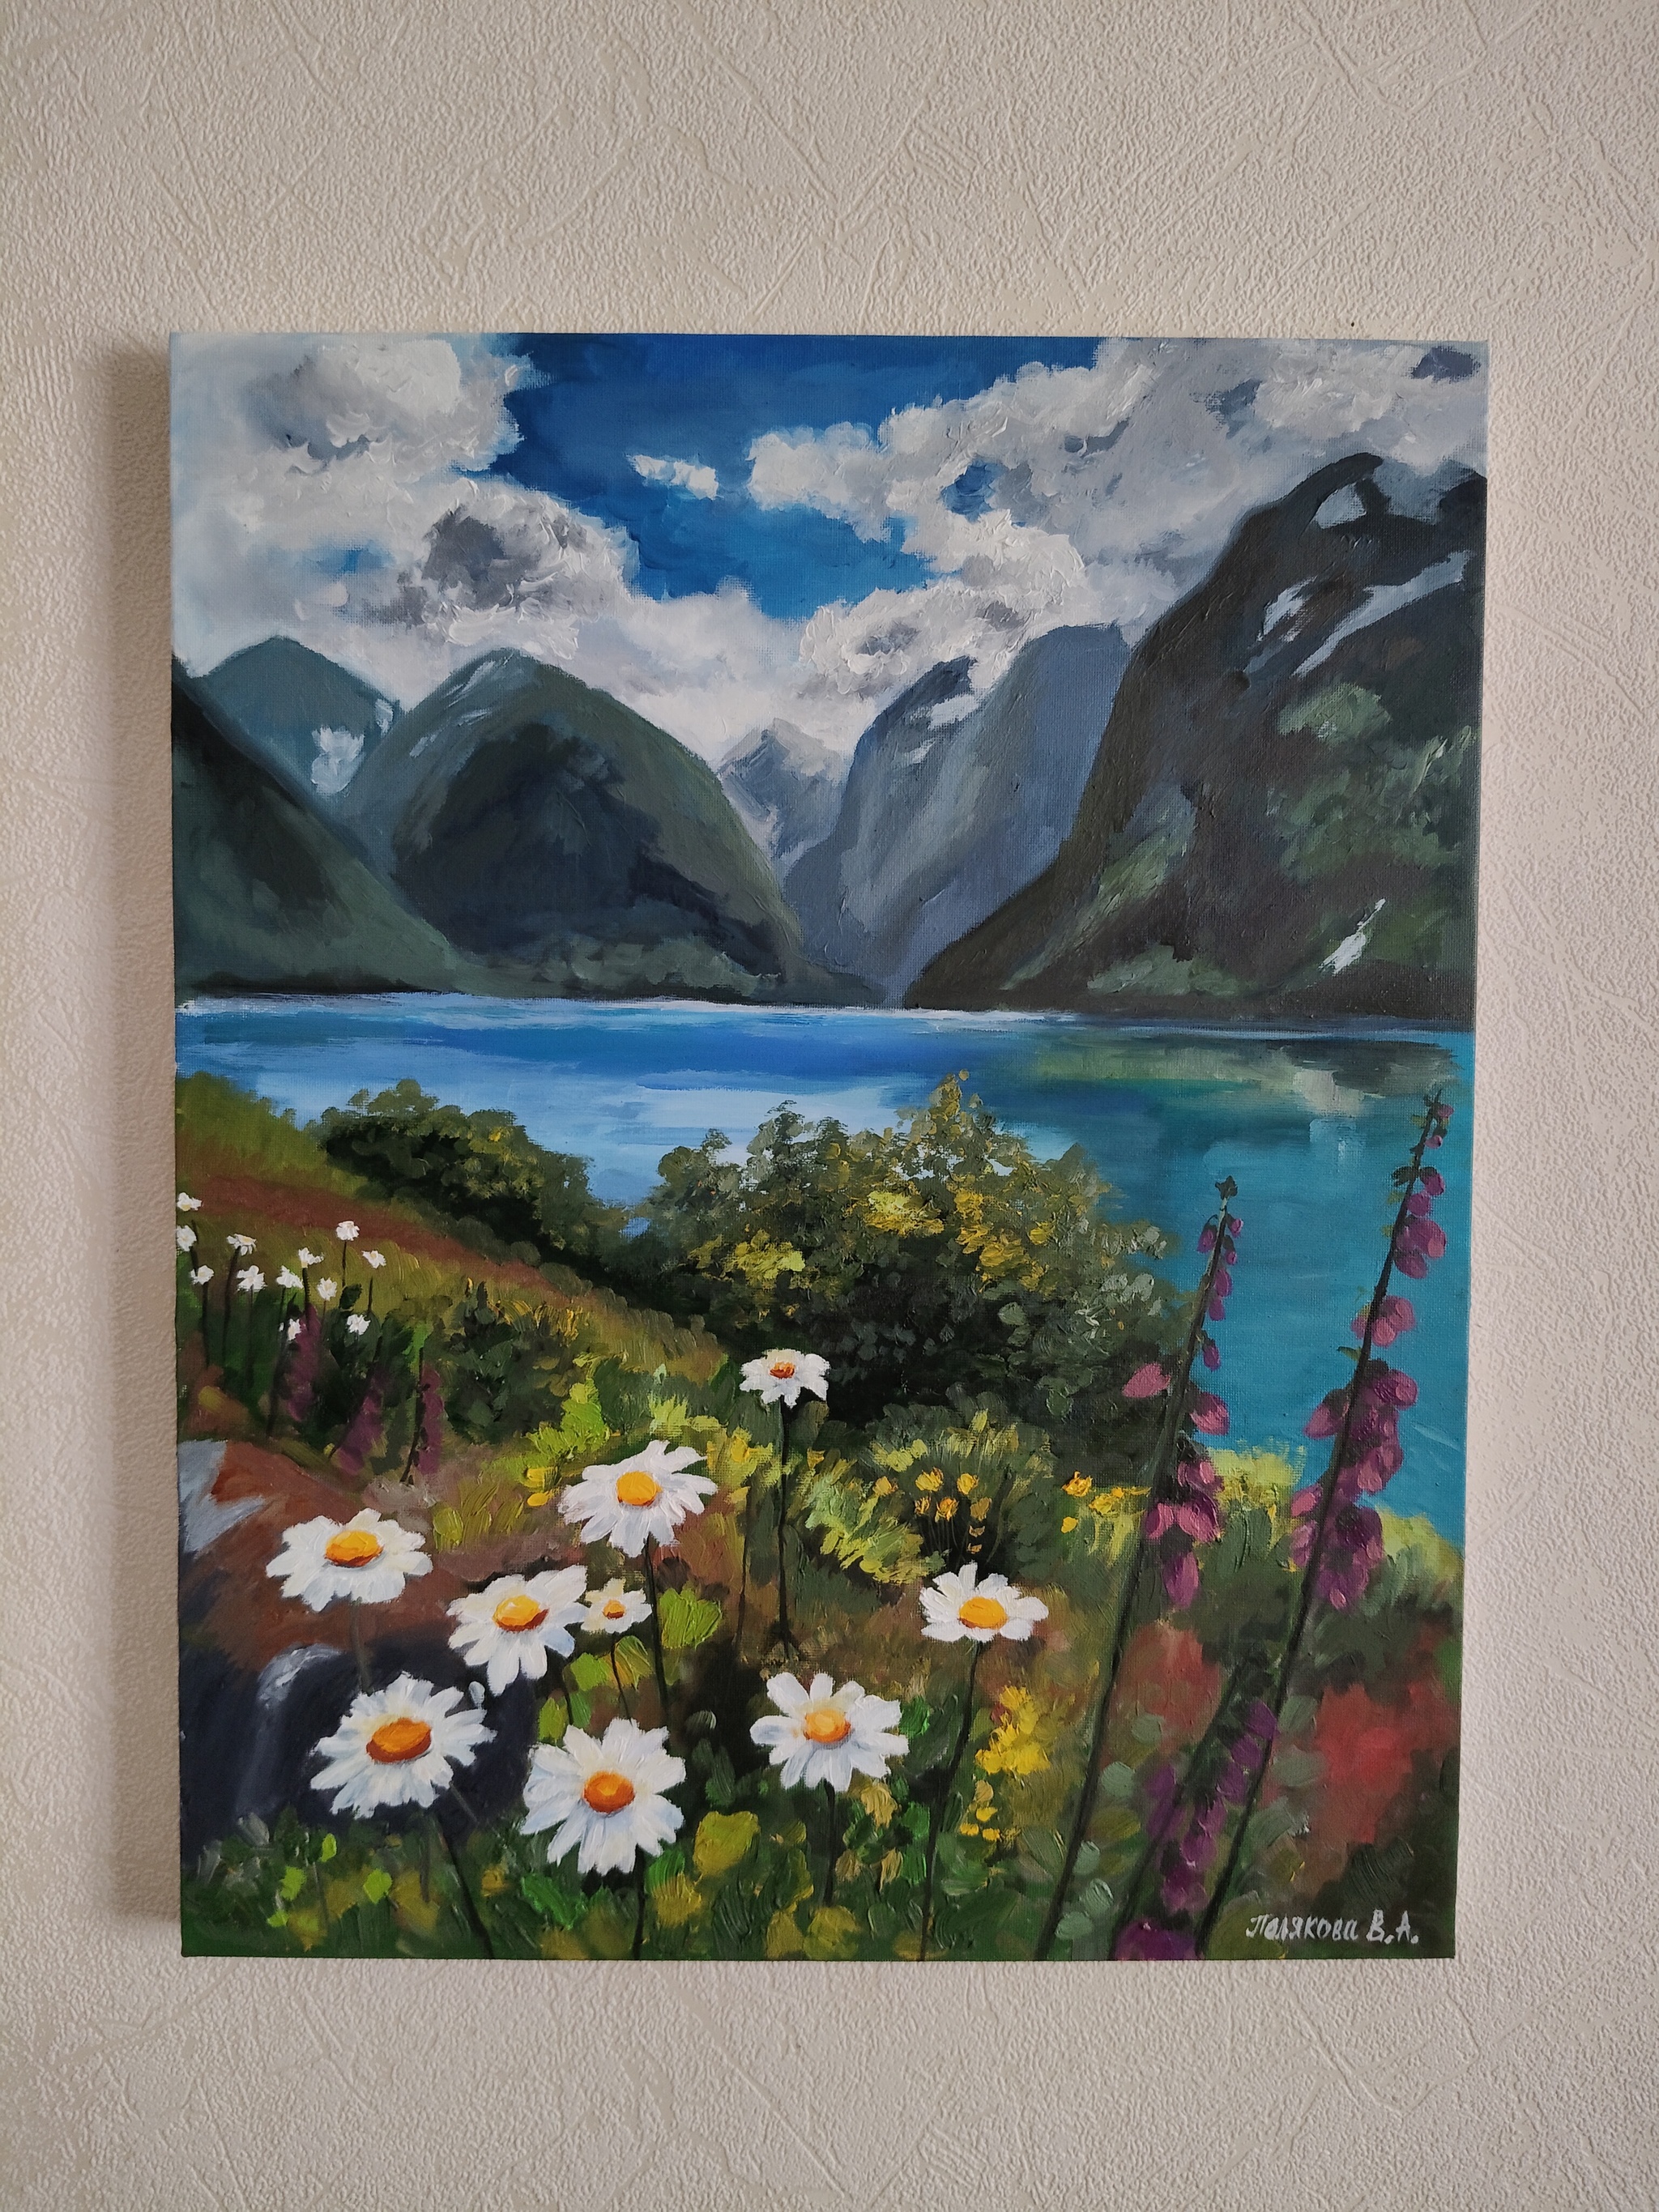 Daisies) Oil paints, canvas 40x50 - My, Painting, Artist, The mountains, Chamomile, Art, Landscape, Longpost